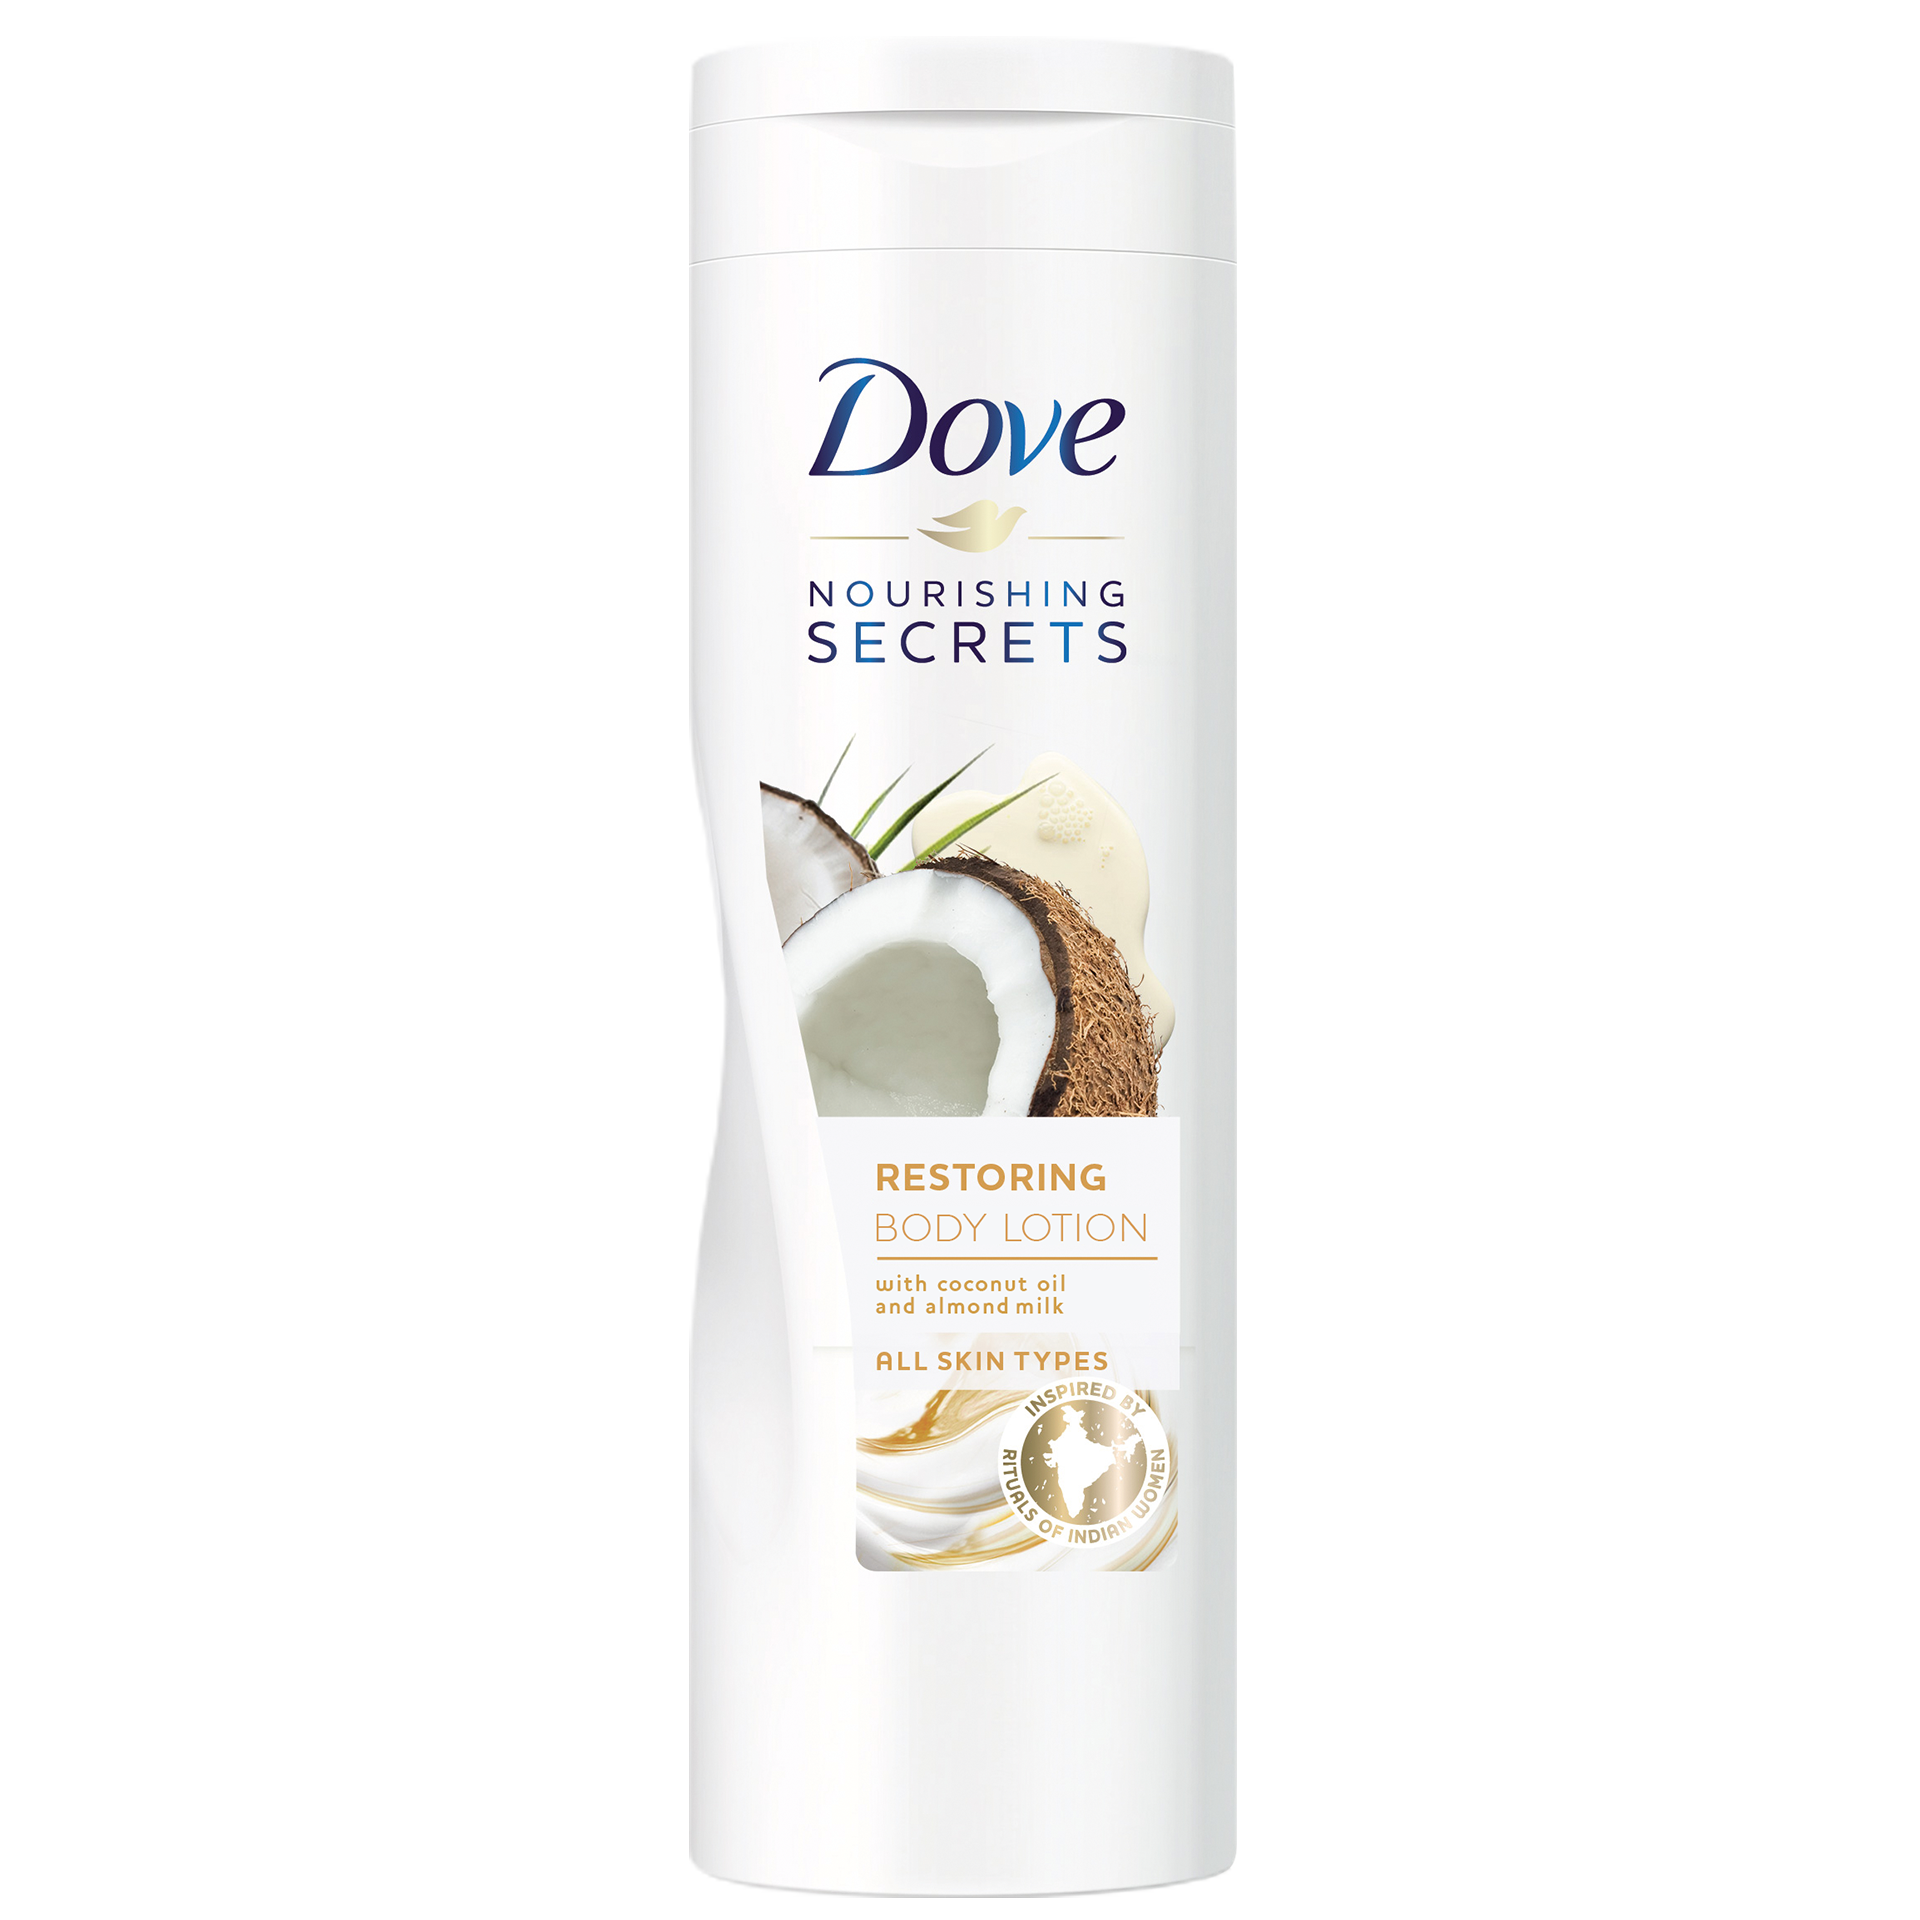 Dove Nourishing Secrets Restoring Body Lotion